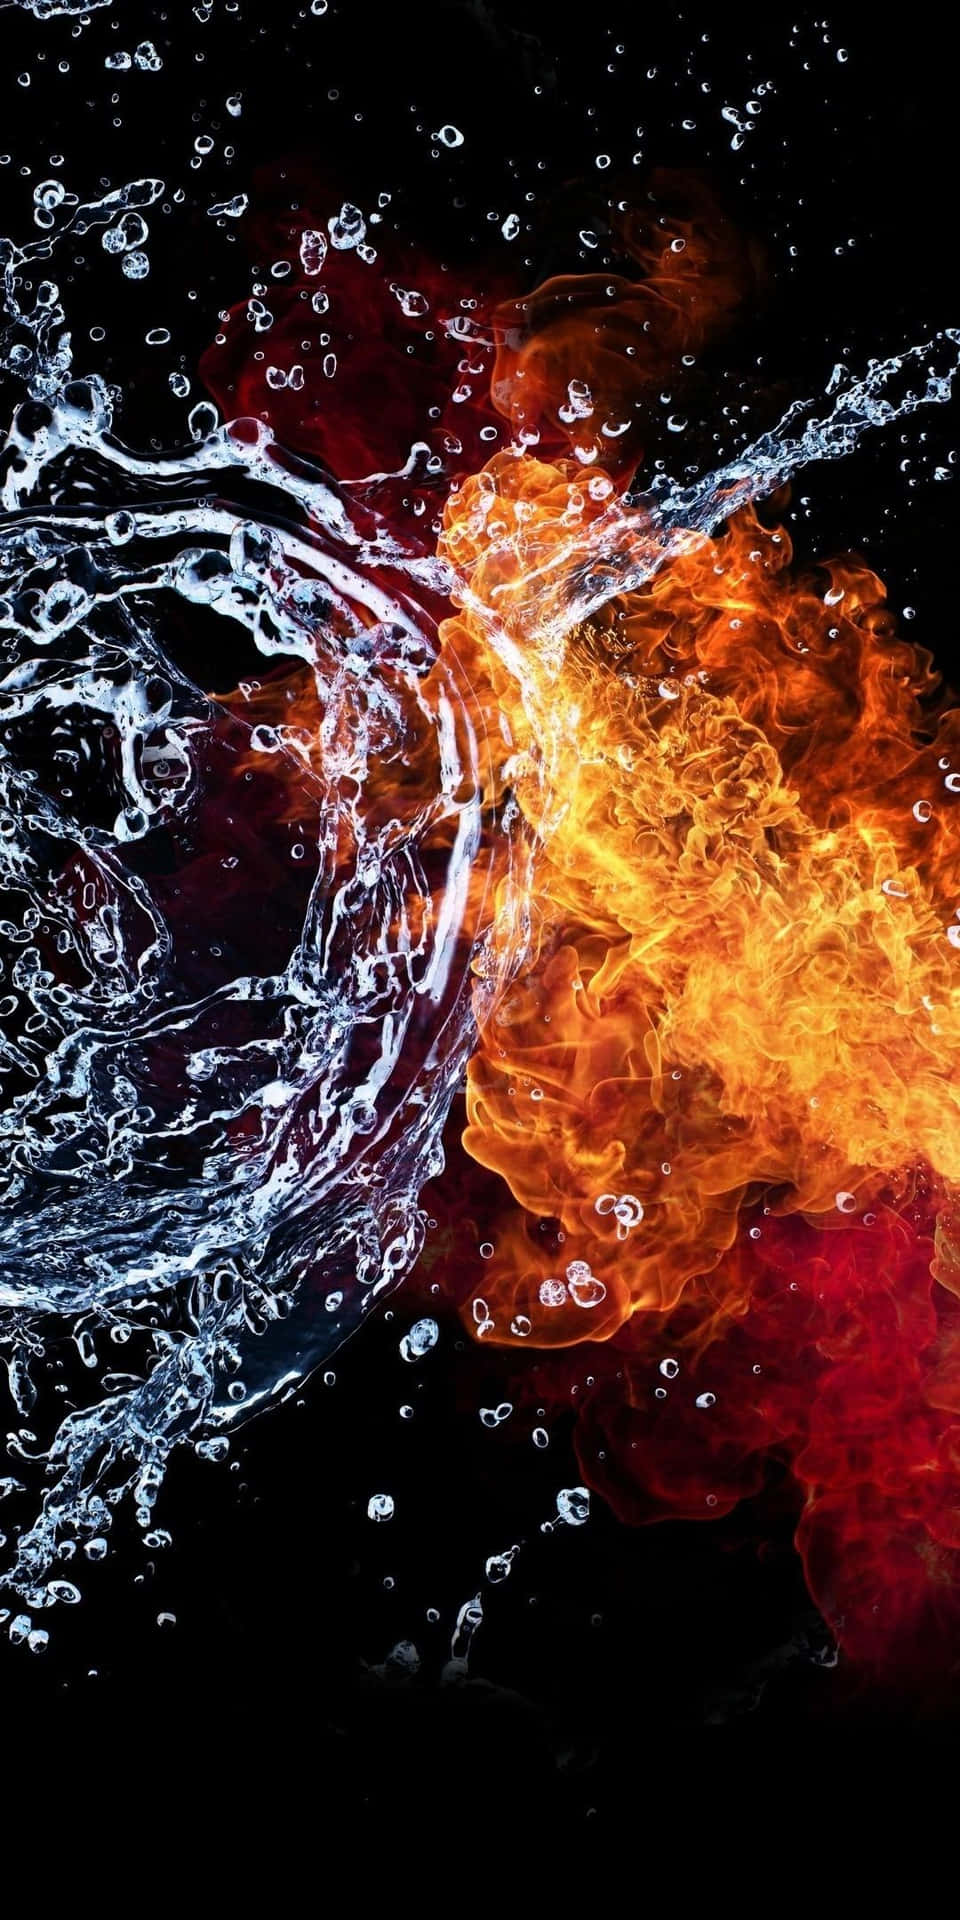 Ild møder Vand i en Explosiv Sammenstød Wallpaper